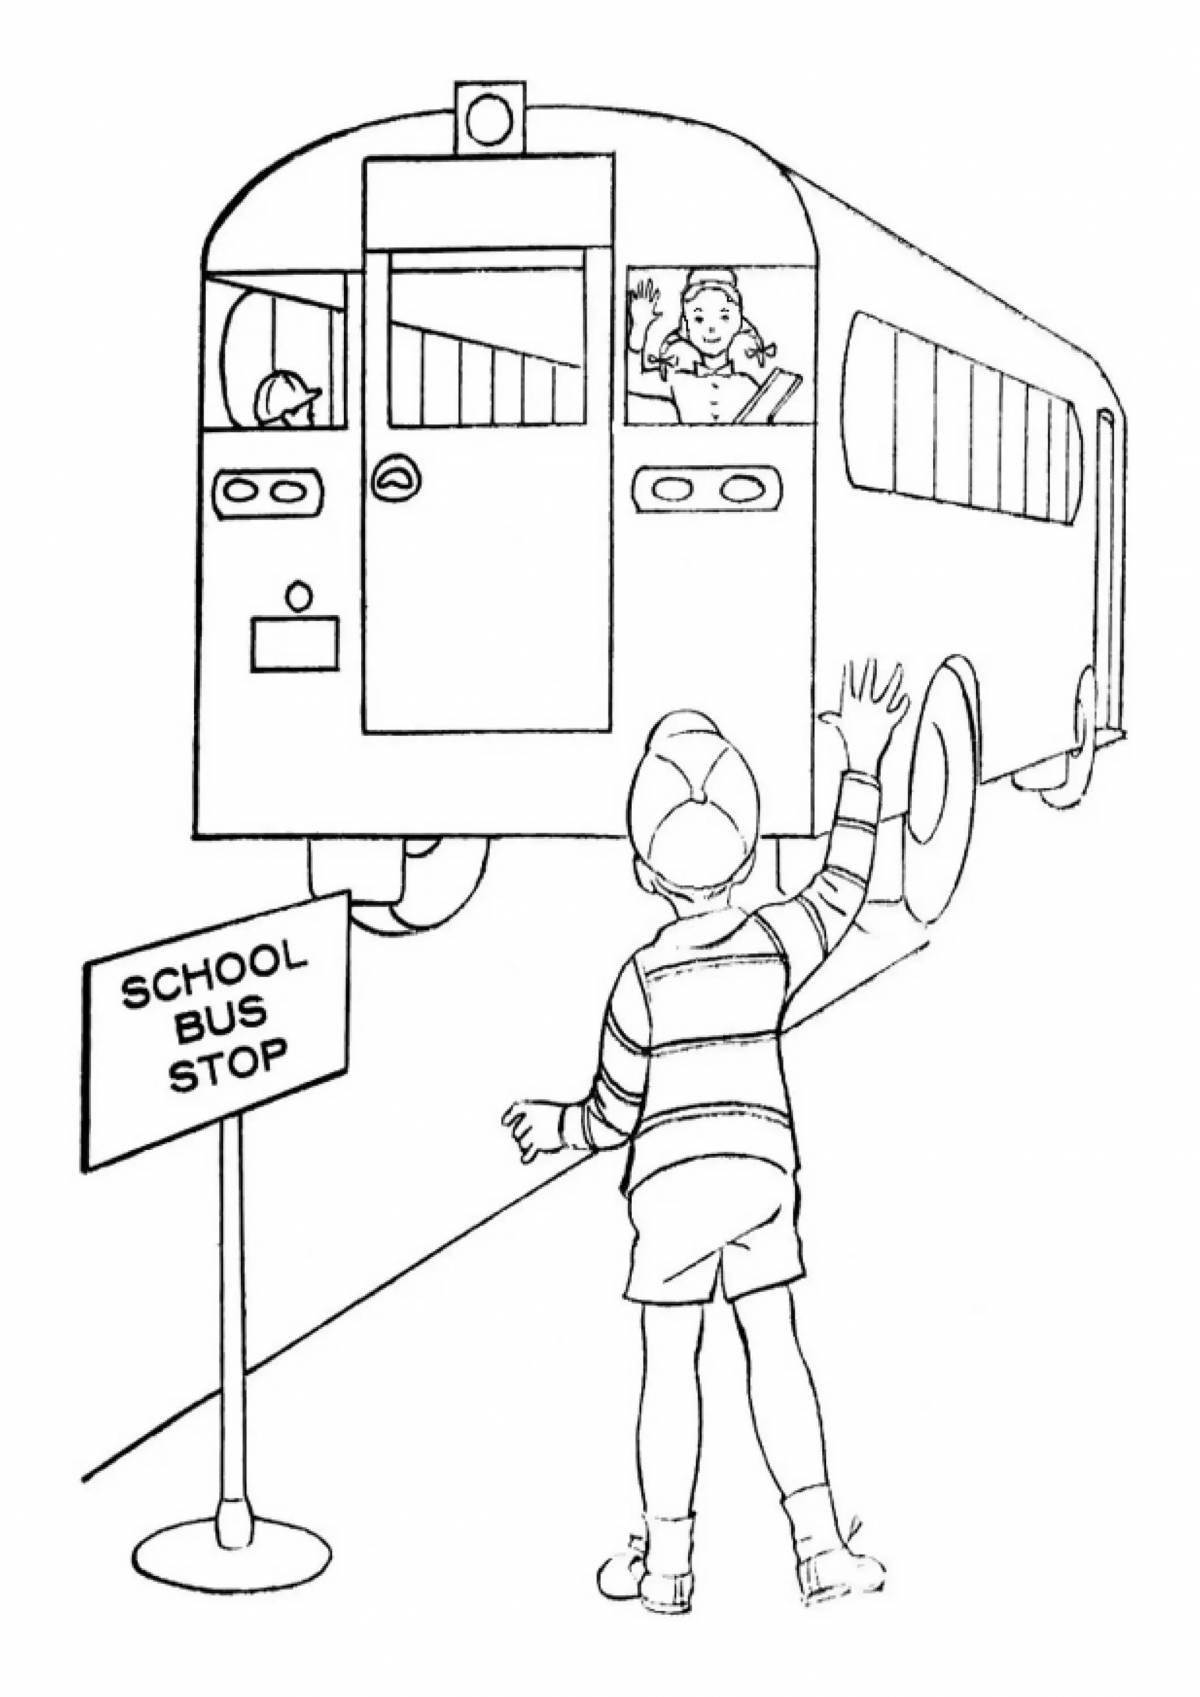 Patient behavior in public transport